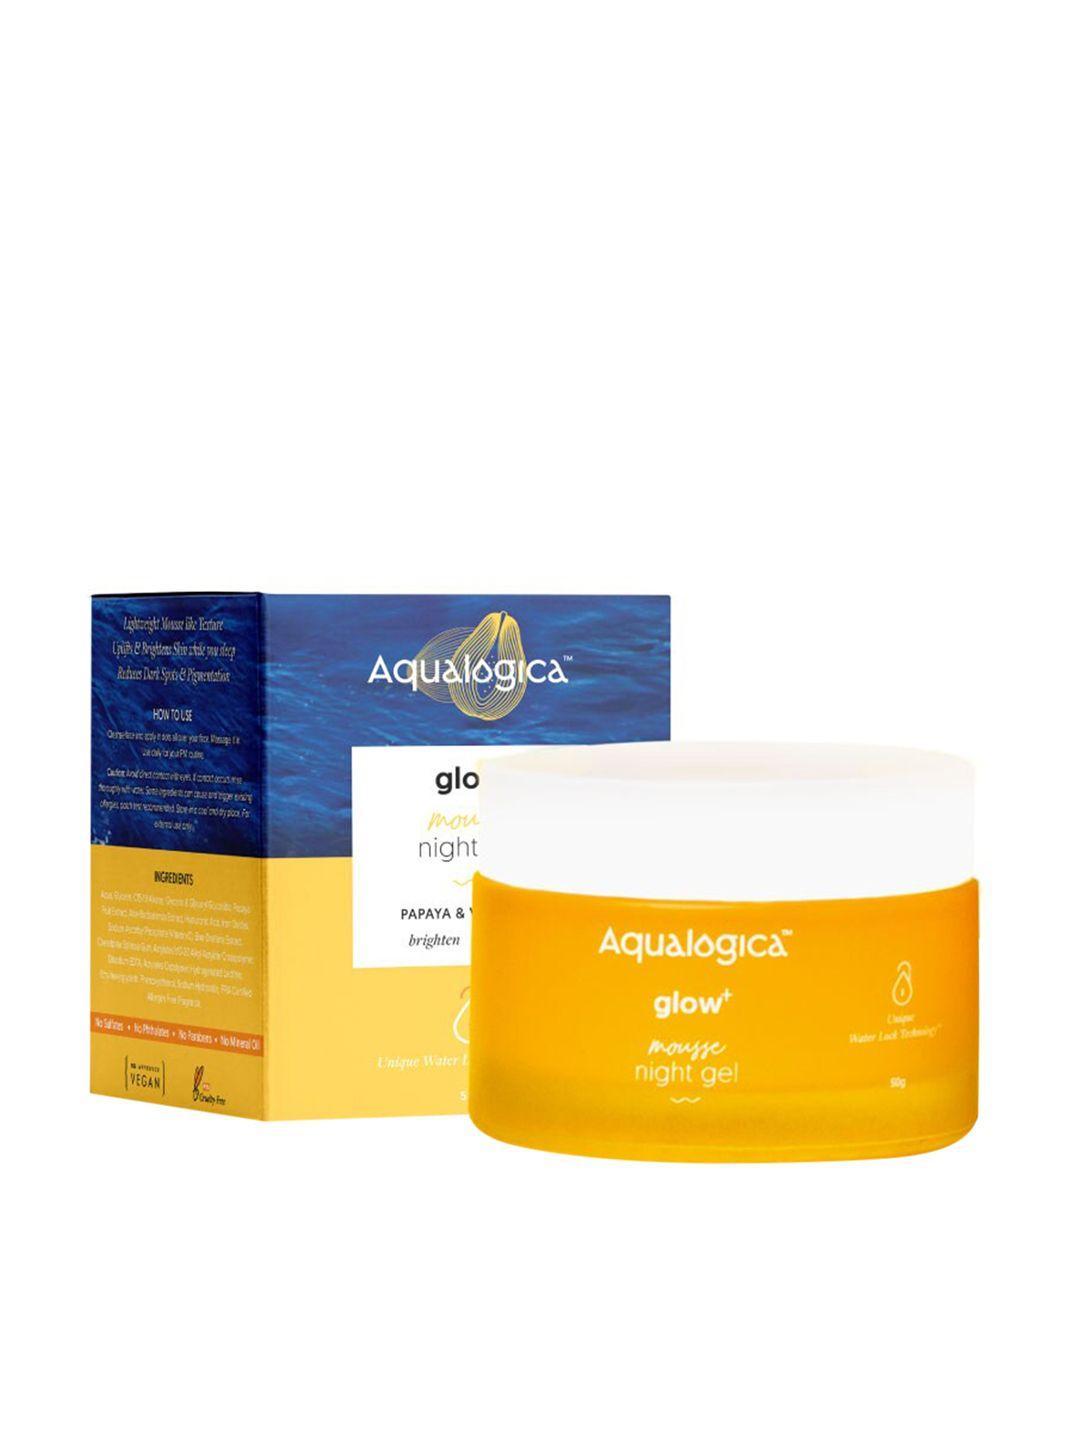 aqualogica glow+ mousse night gel for bright plump skin - 50 g